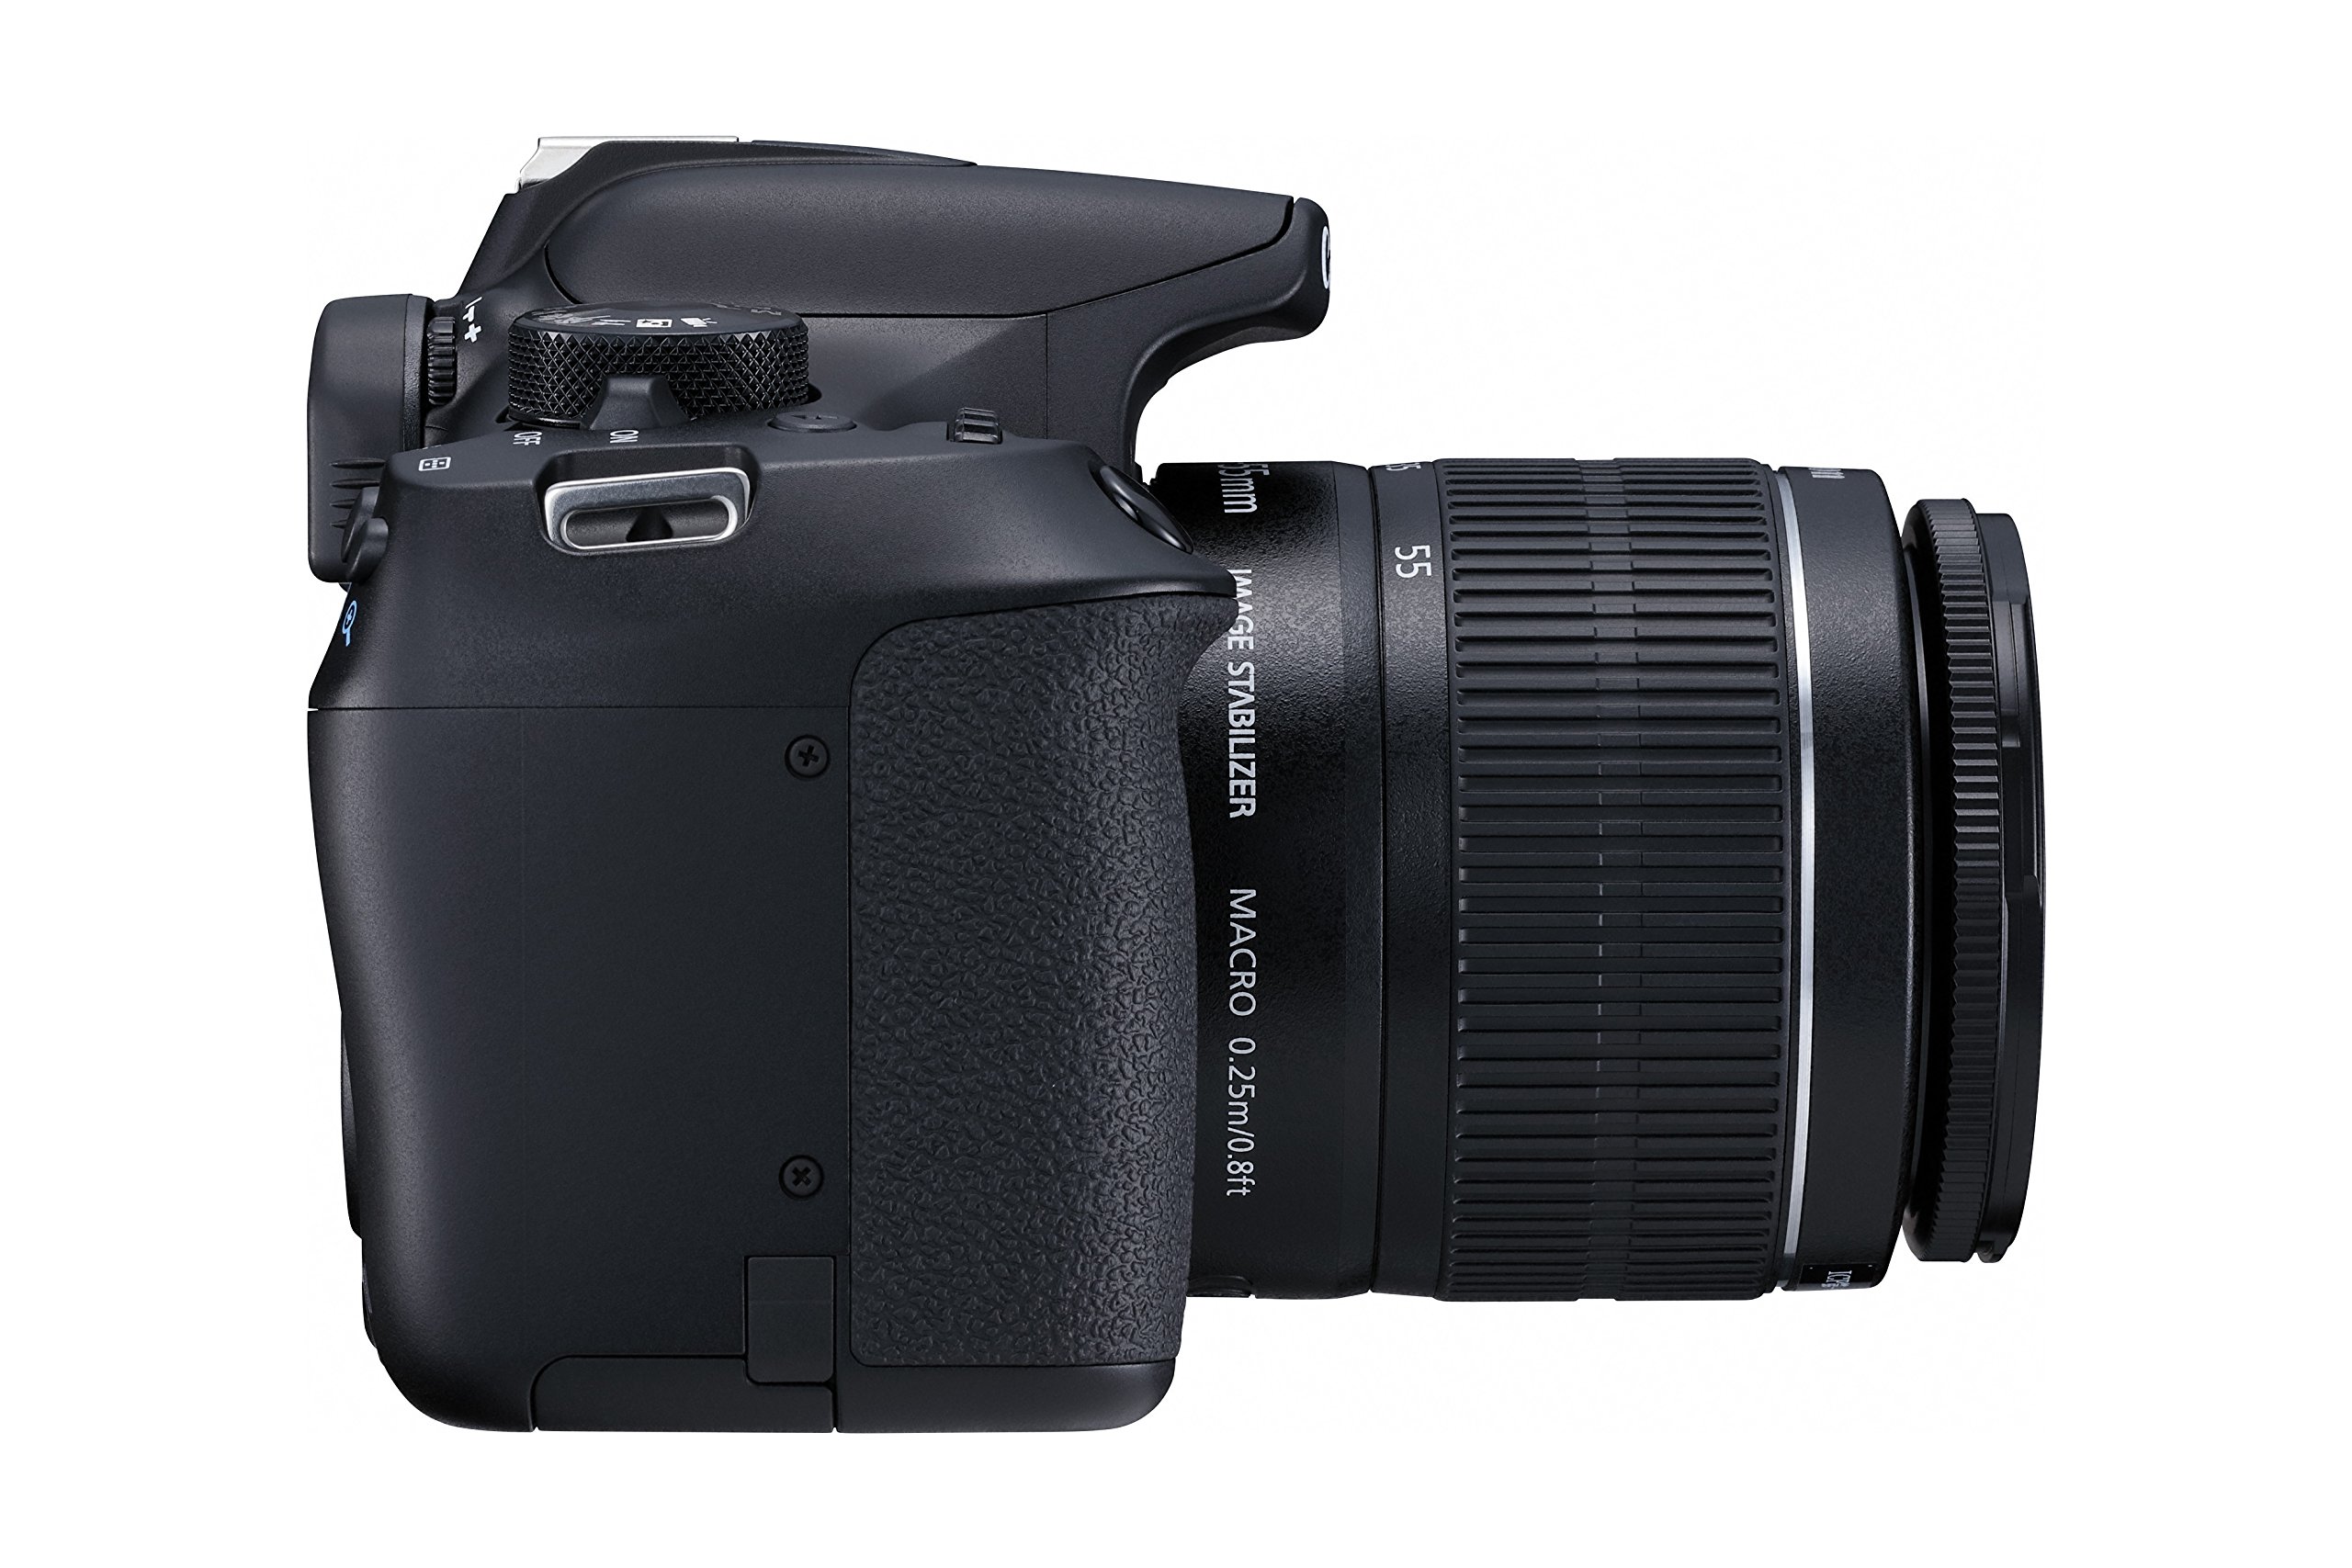 Canon EOS Rebel T6 Digital SLR Camera Kit with EF-S 18-55mm f/3.5-5.6 is II Lens (Black)